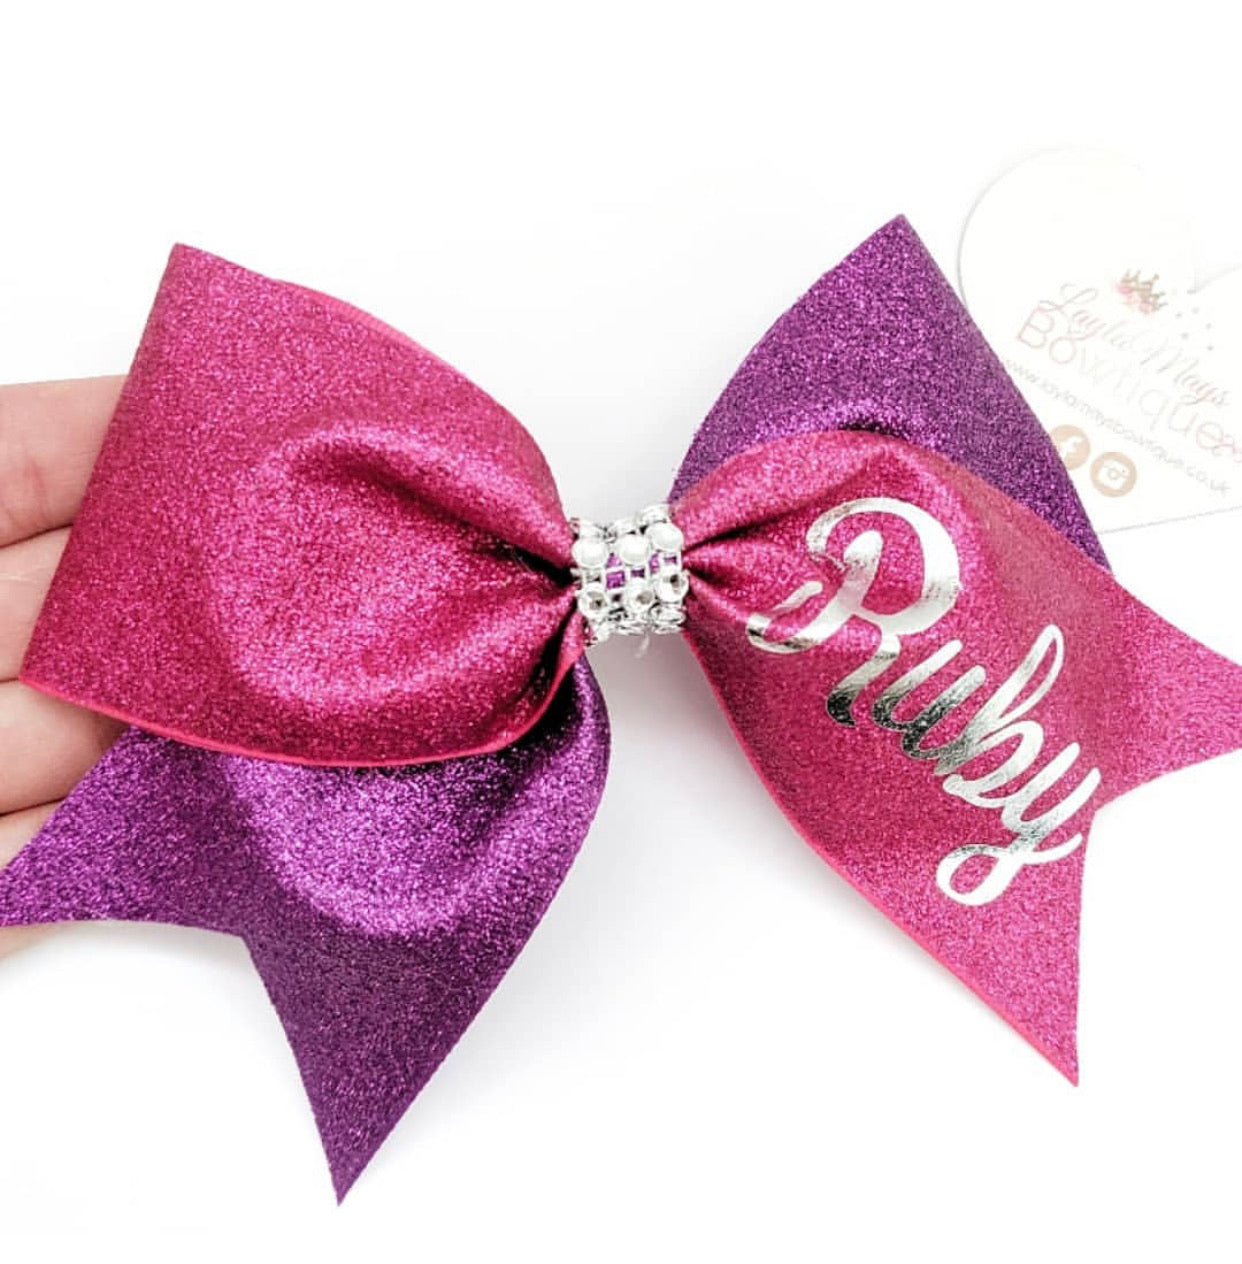 Purple Glitter Grosgrain Ribbon 3'' - Eliza Henri Craft Supply